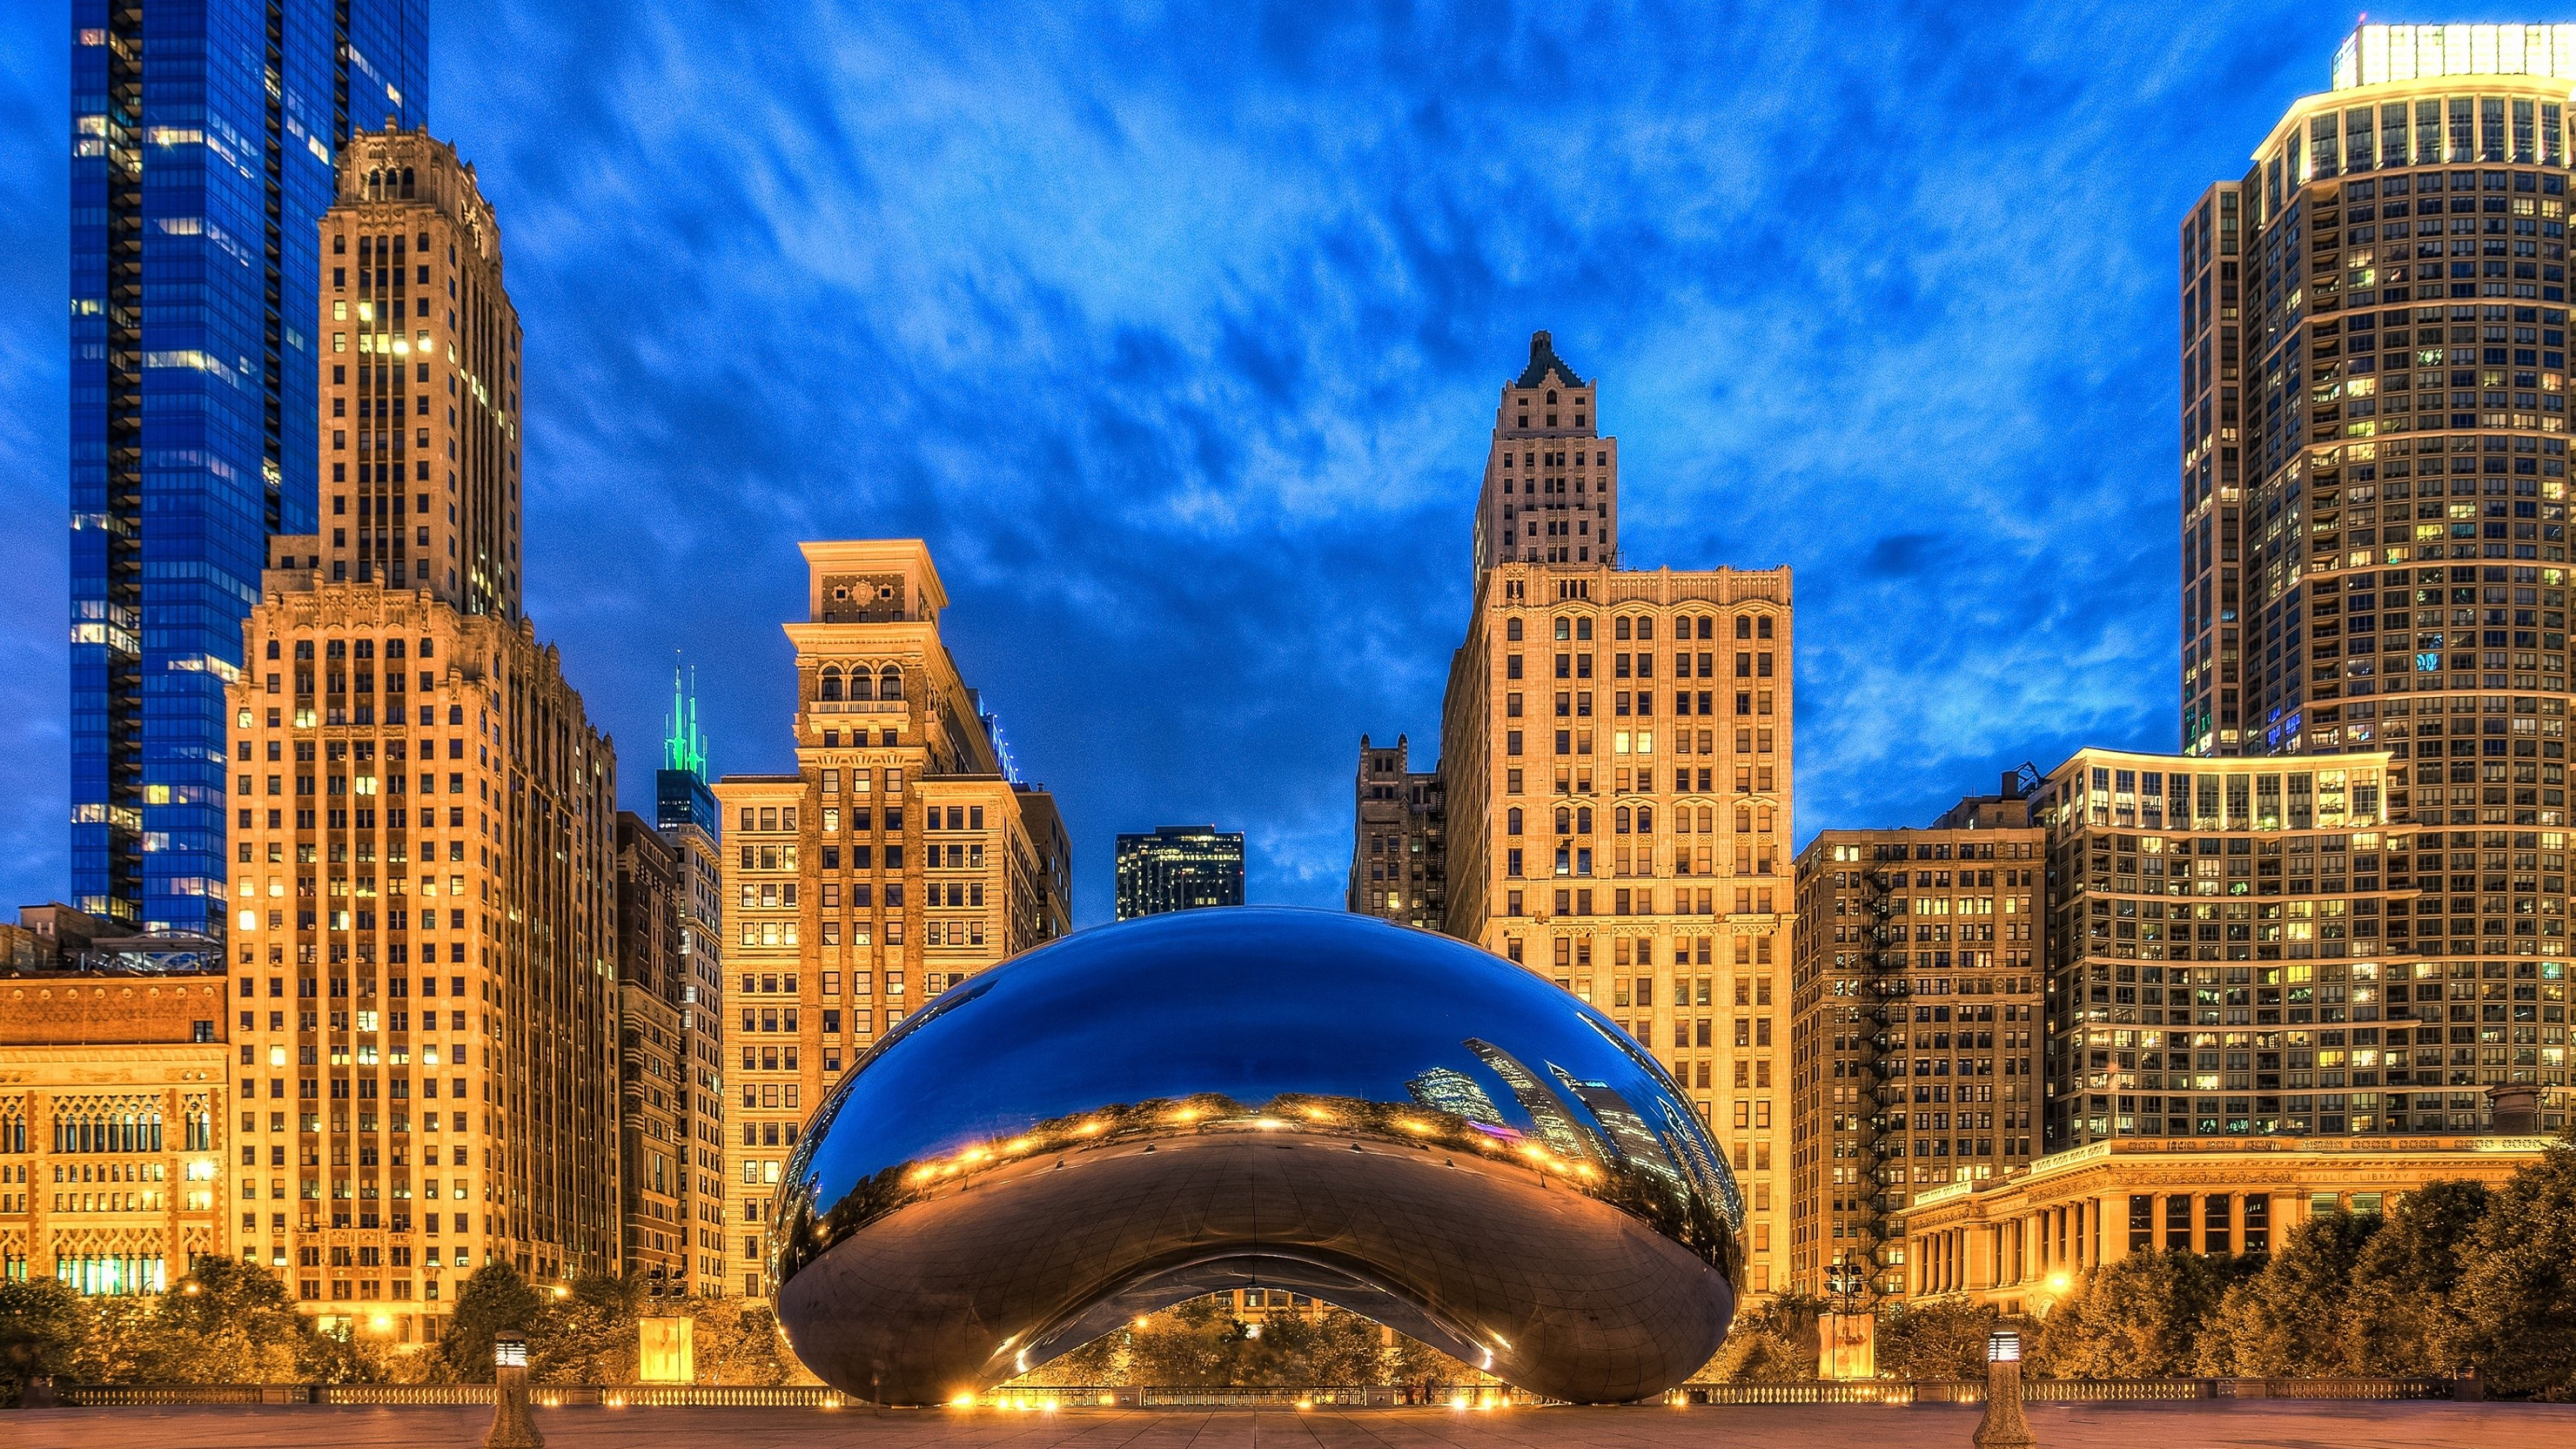 4K Ultra HD Chicago wallpapers, City life, Urban architecture, Stunning views, 3840x2160 4K Desktop